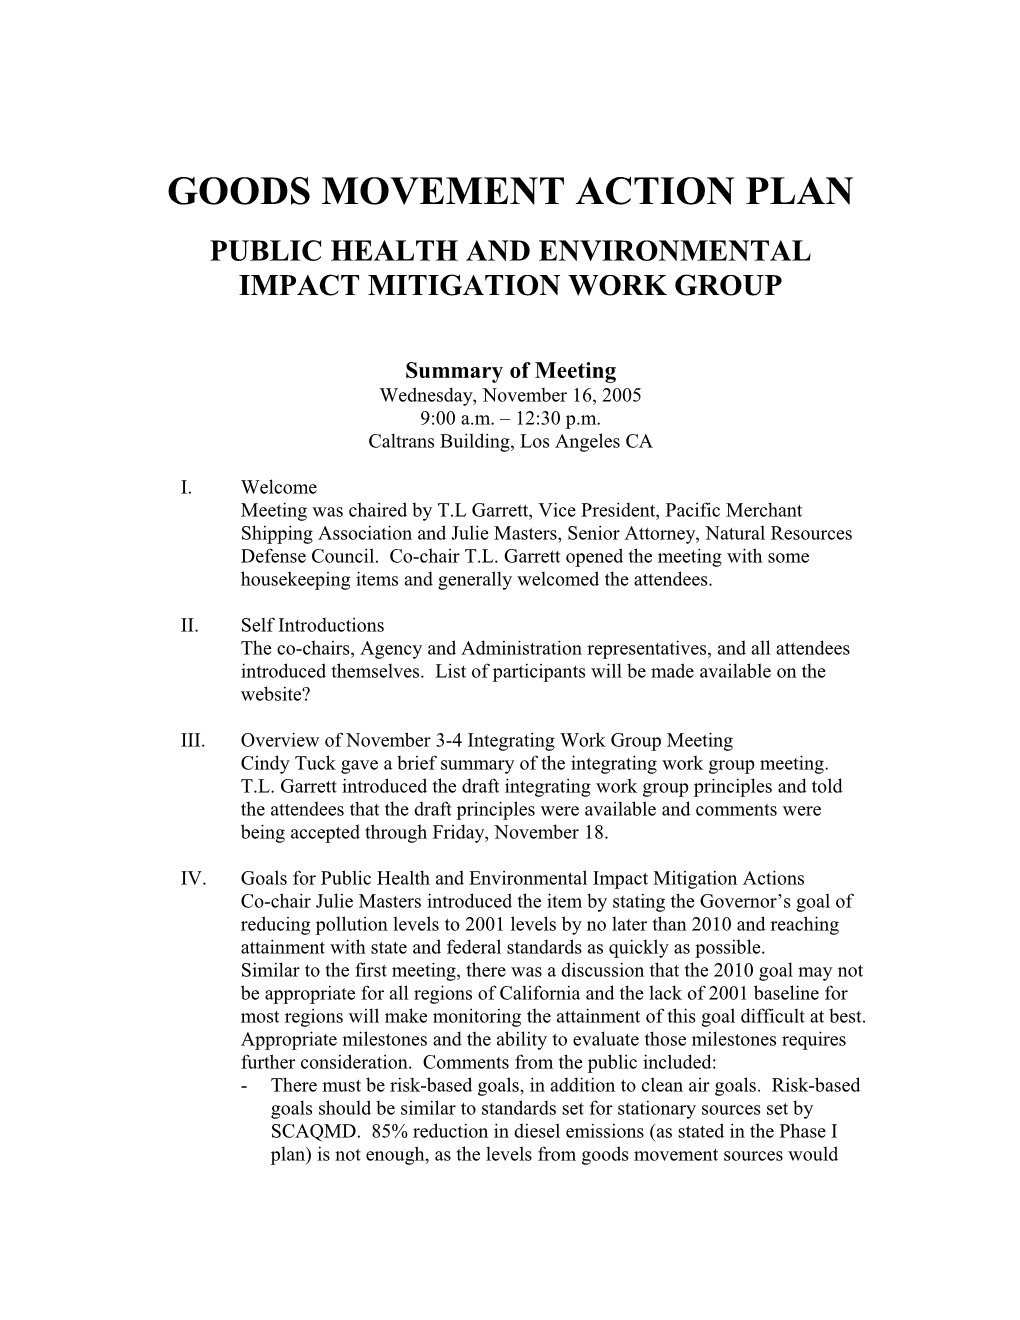 Goods Movement Action Plan